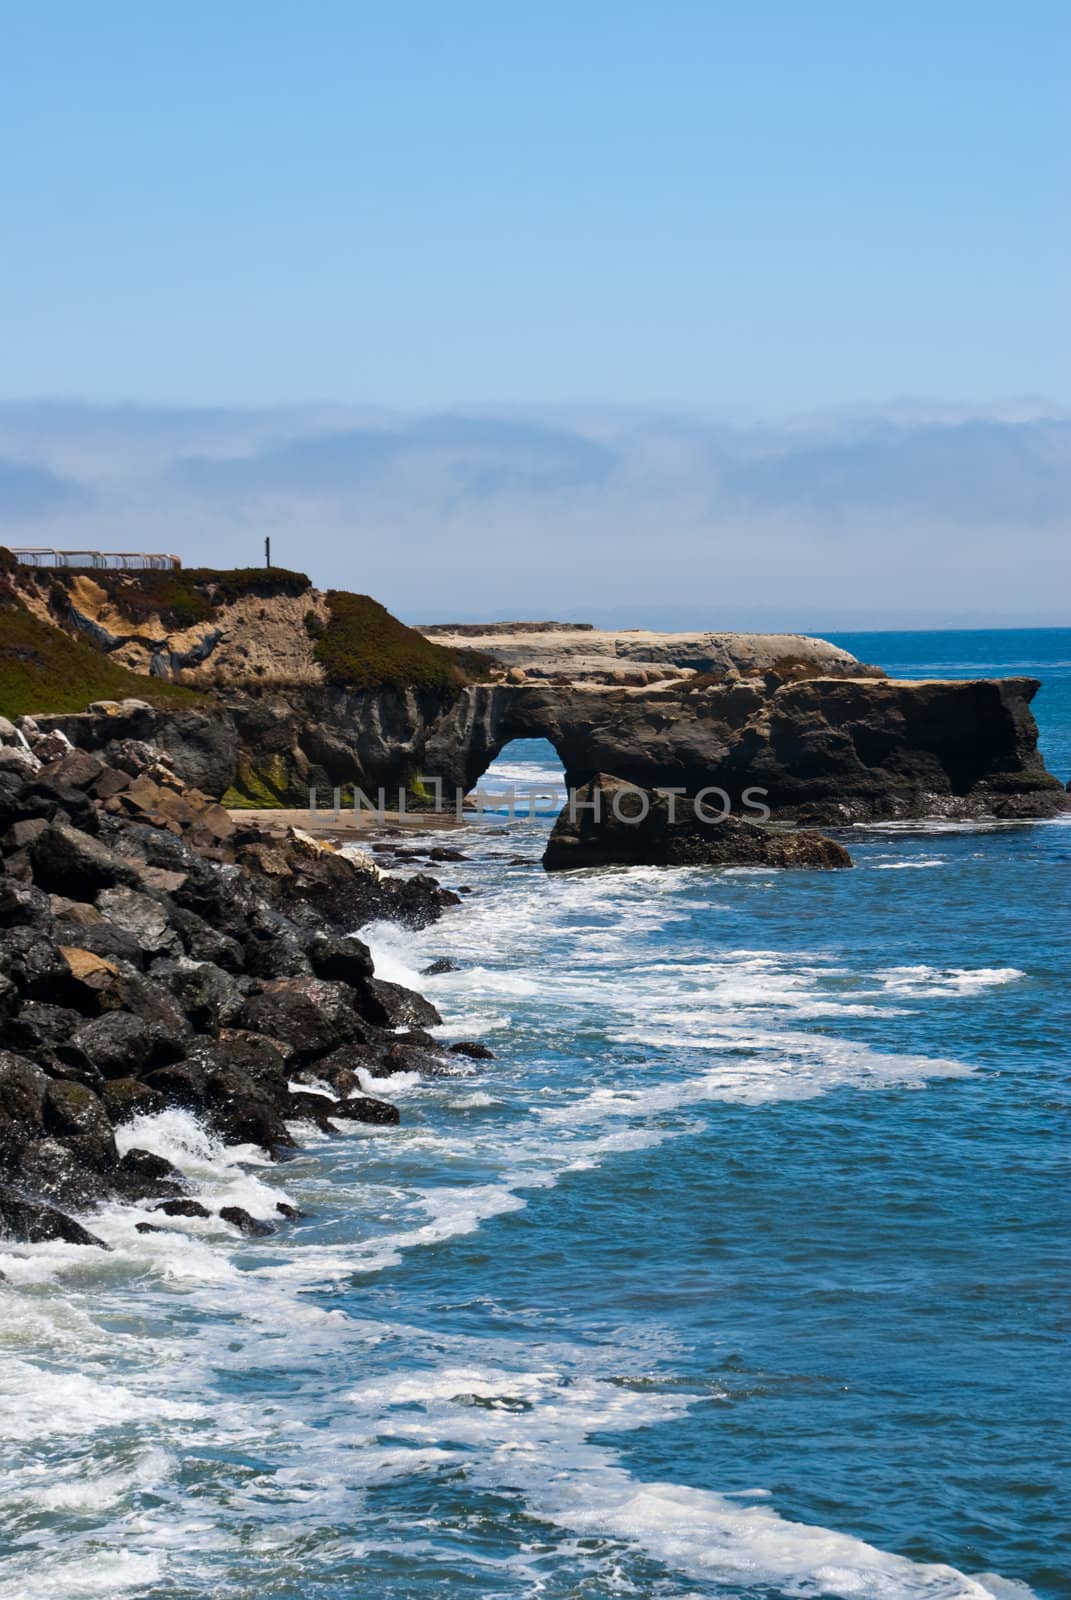 Arch Rock on Californian Beach by emattil